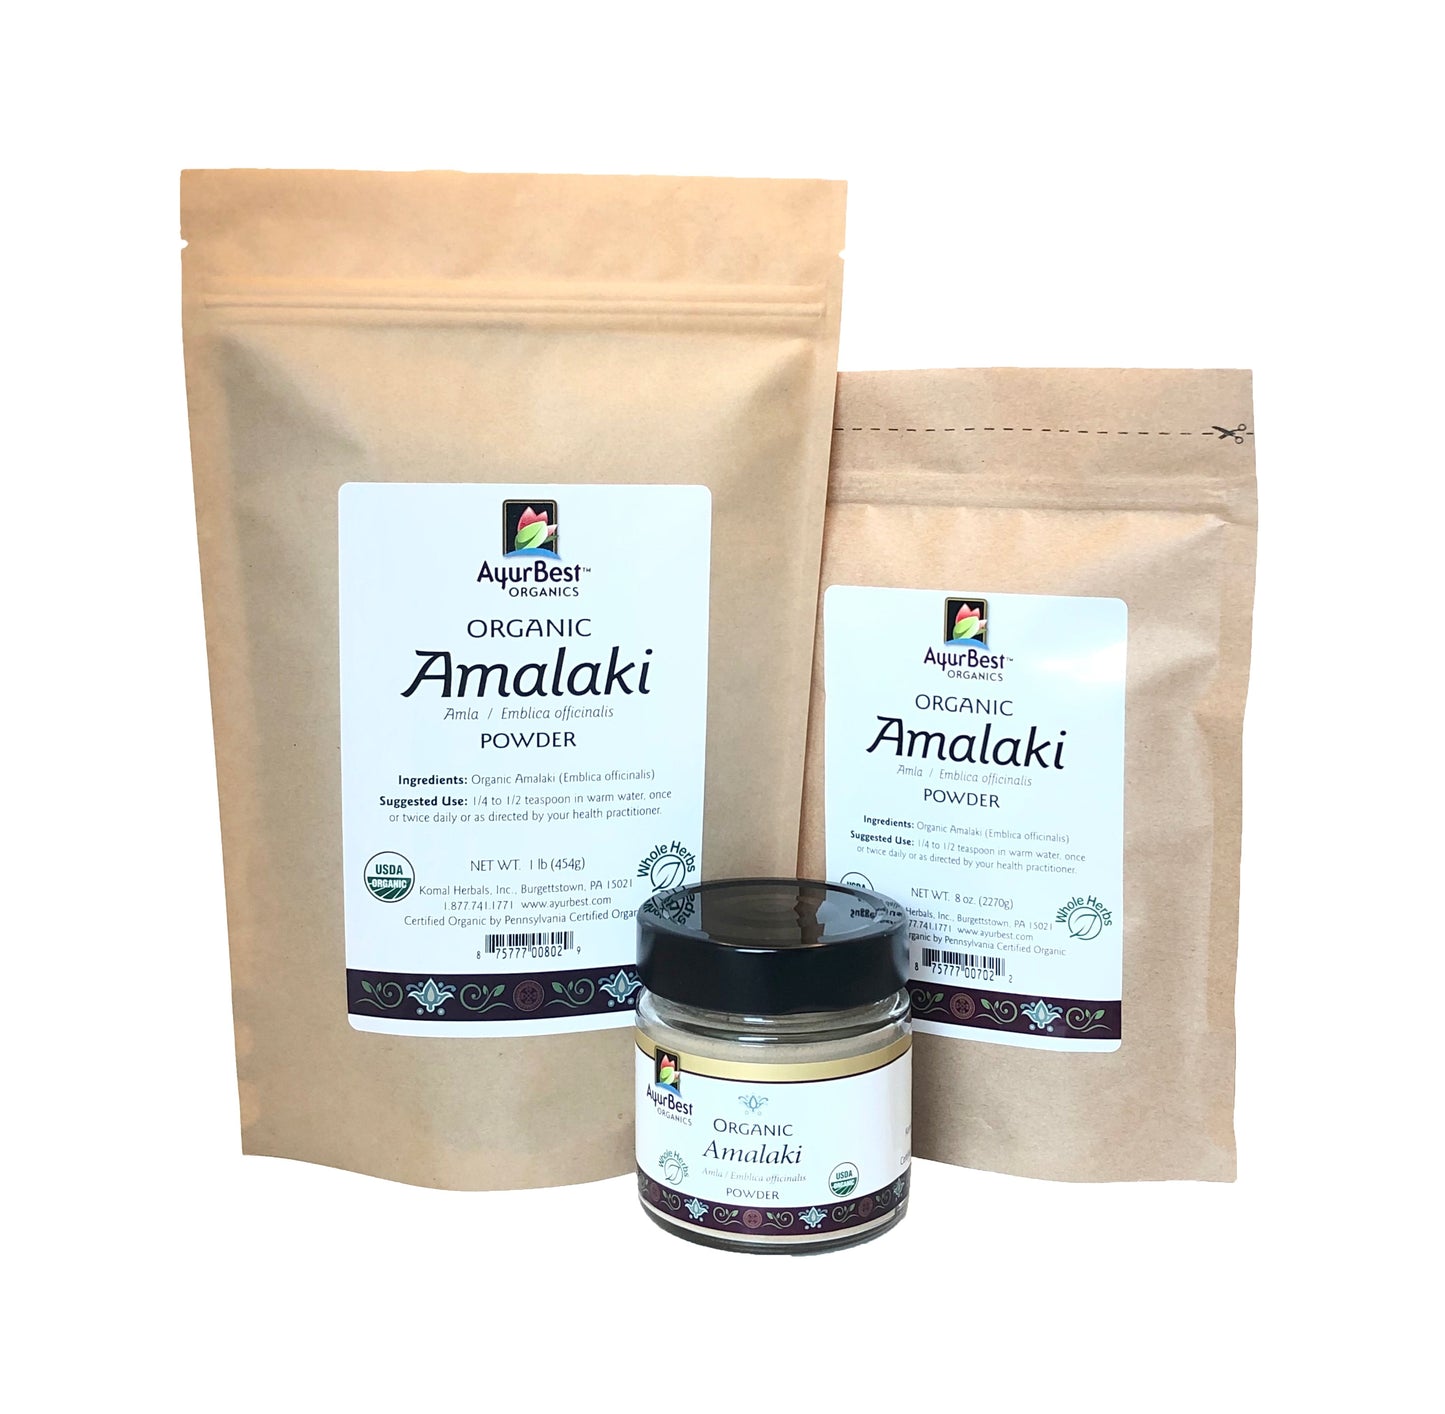 Wholesale Spices & Herbs - Amalaki (Amla) Powder, Organic 1lb (454g) Bag